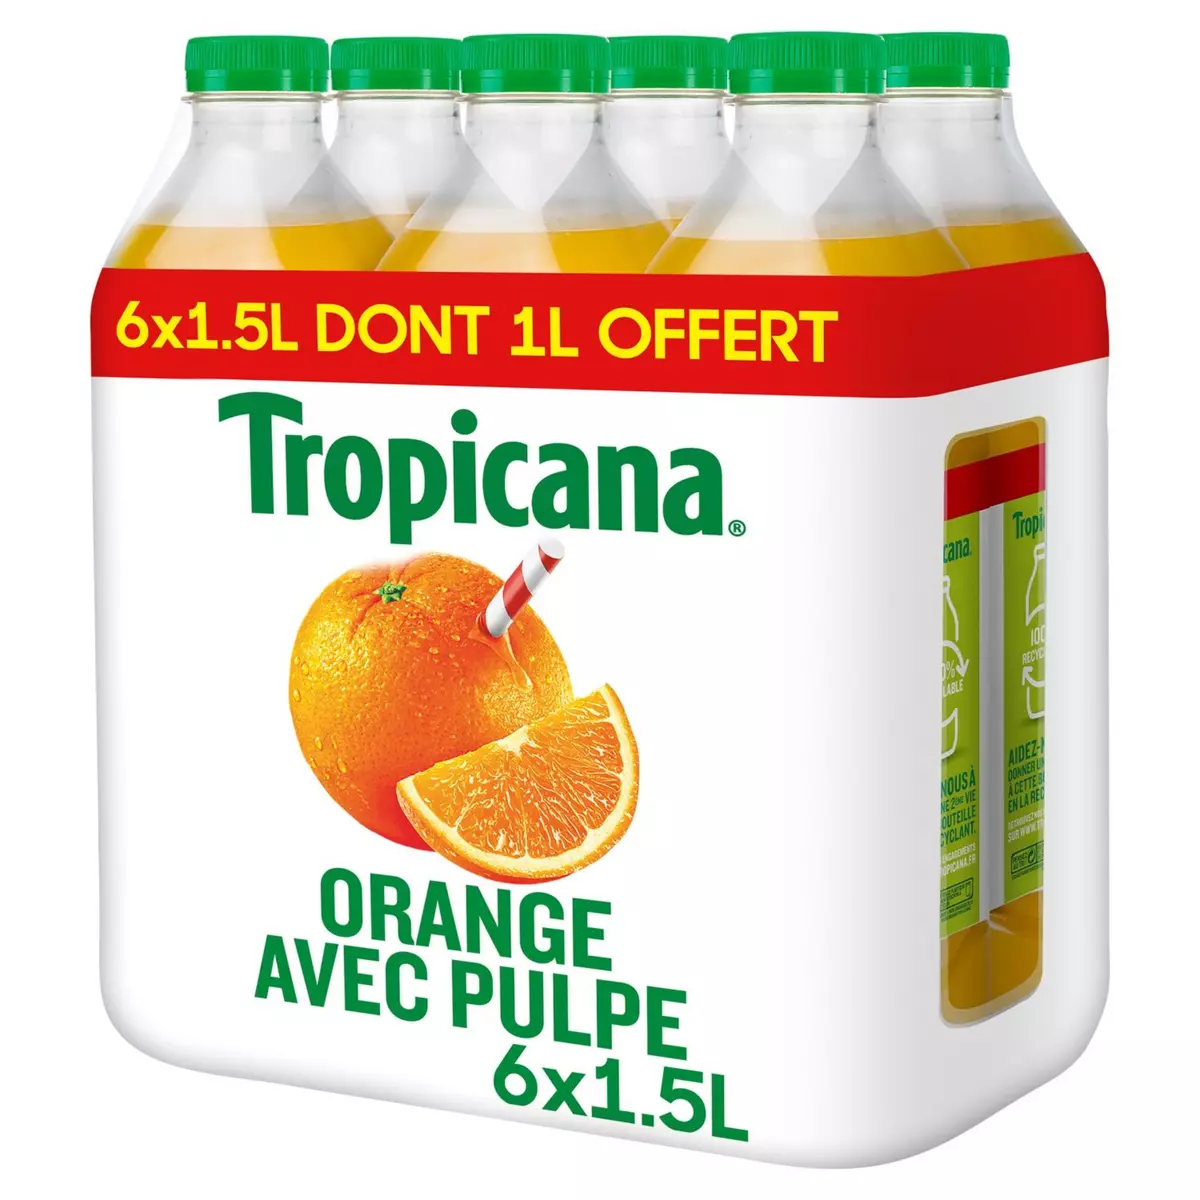 TROPICANA Jus pure premium 100% orange avec pulpe dont 1l offert 6x1,5l